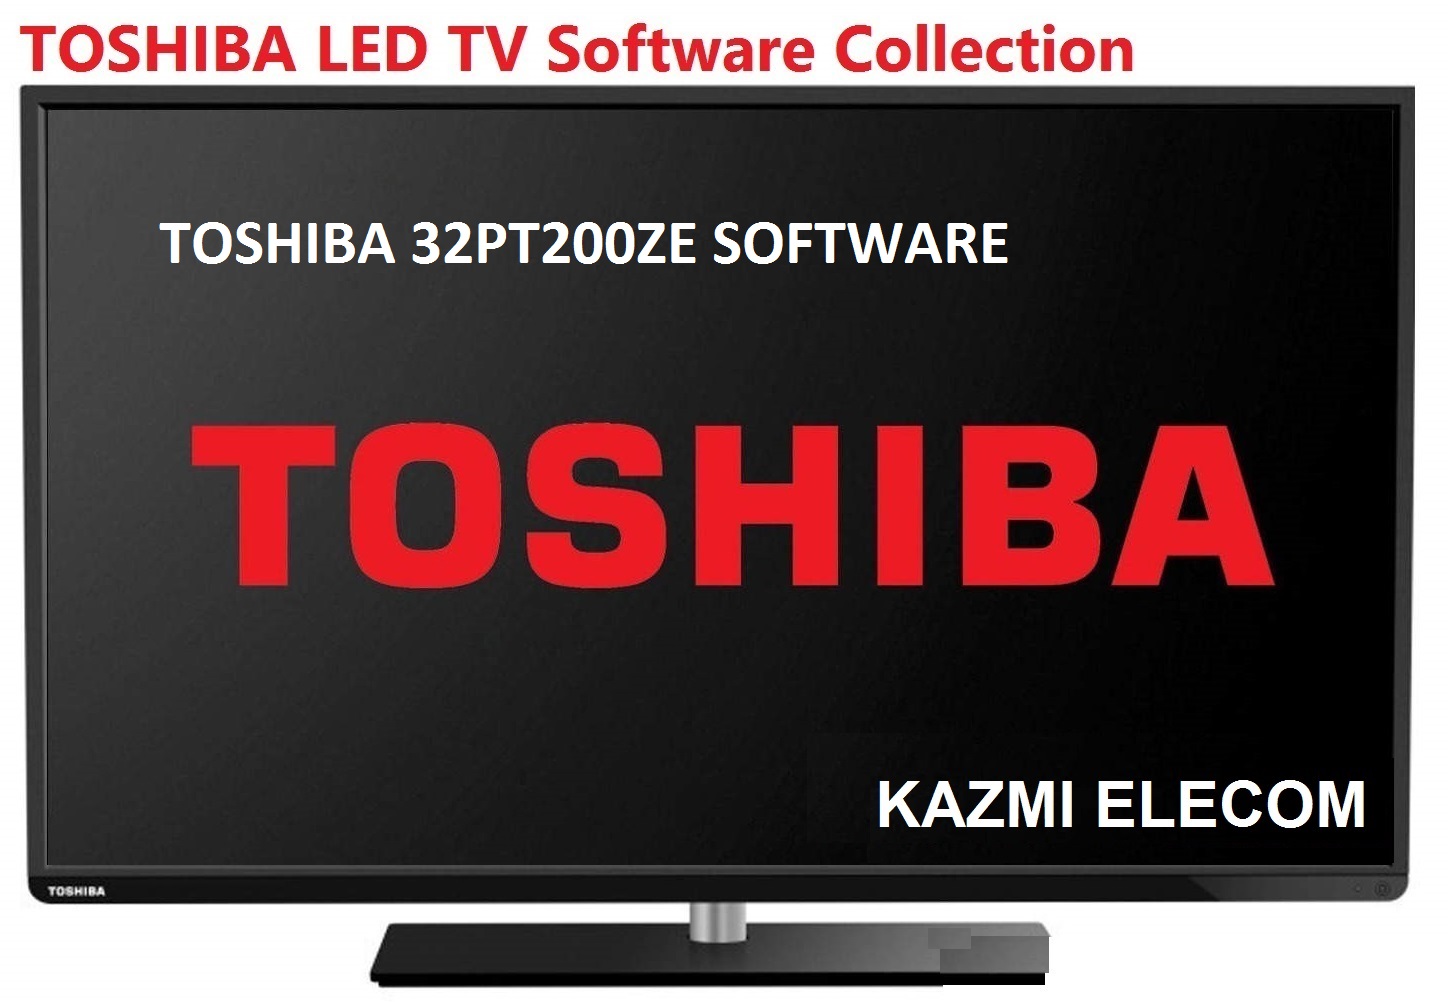 Toshiba 32Pt200Ze